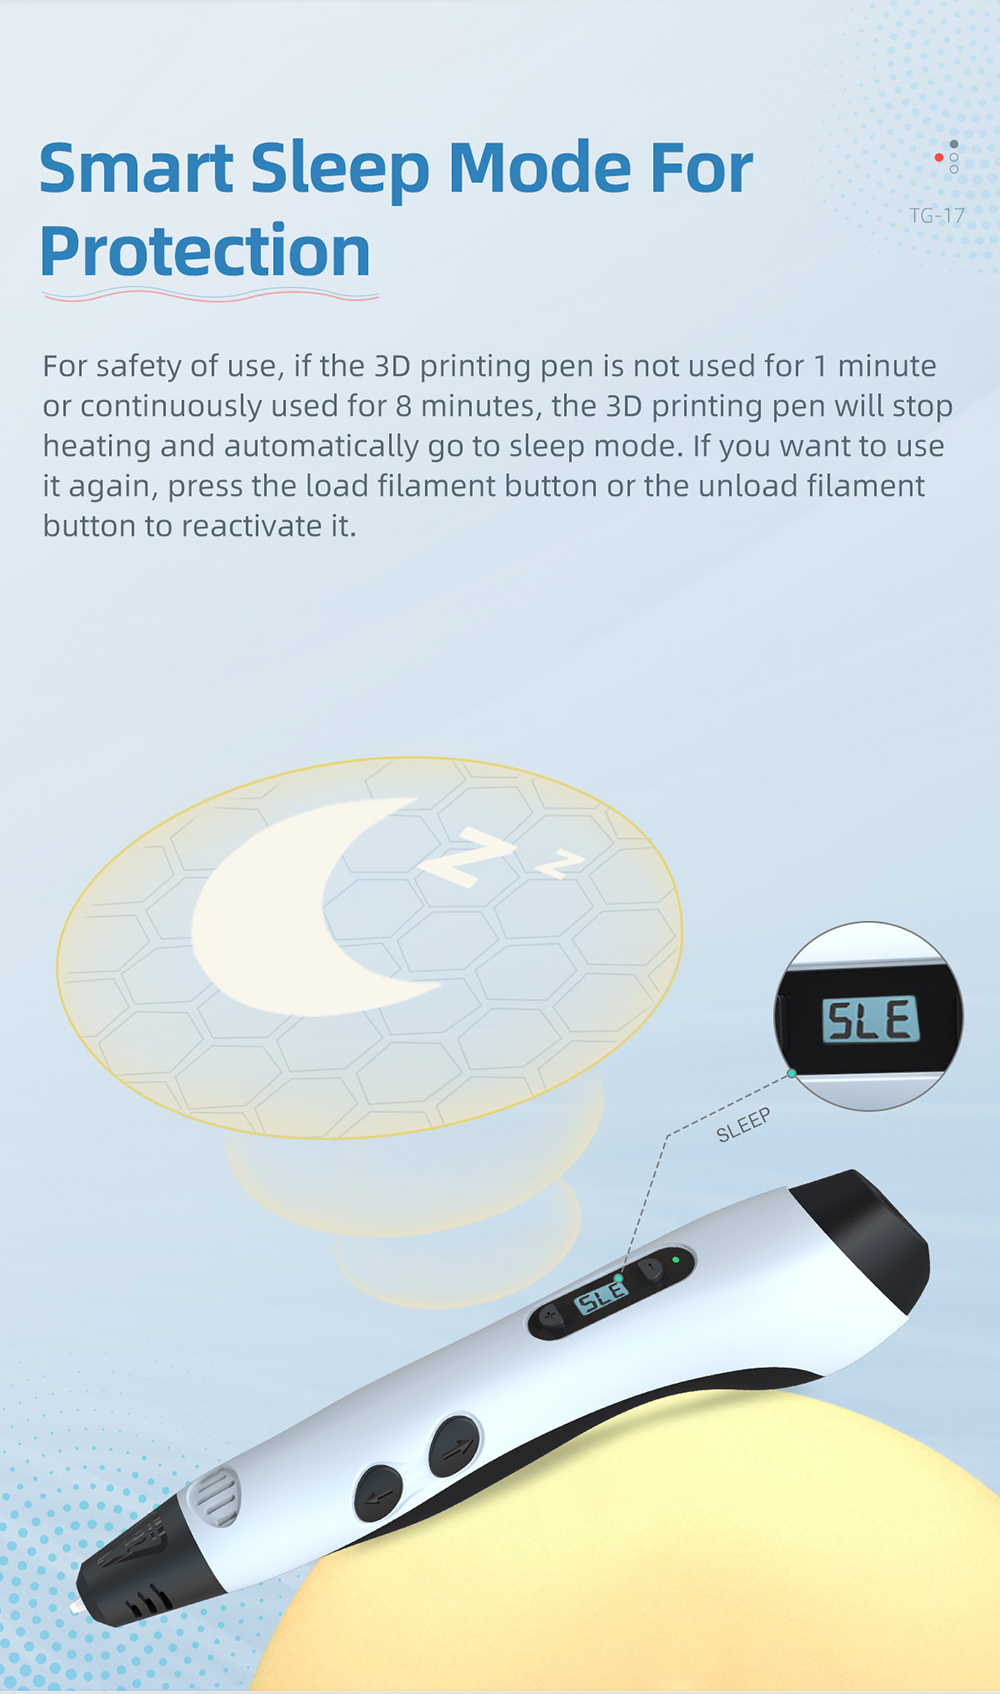 TG-17 3D Printing Pen description of smart sleep mode for protection